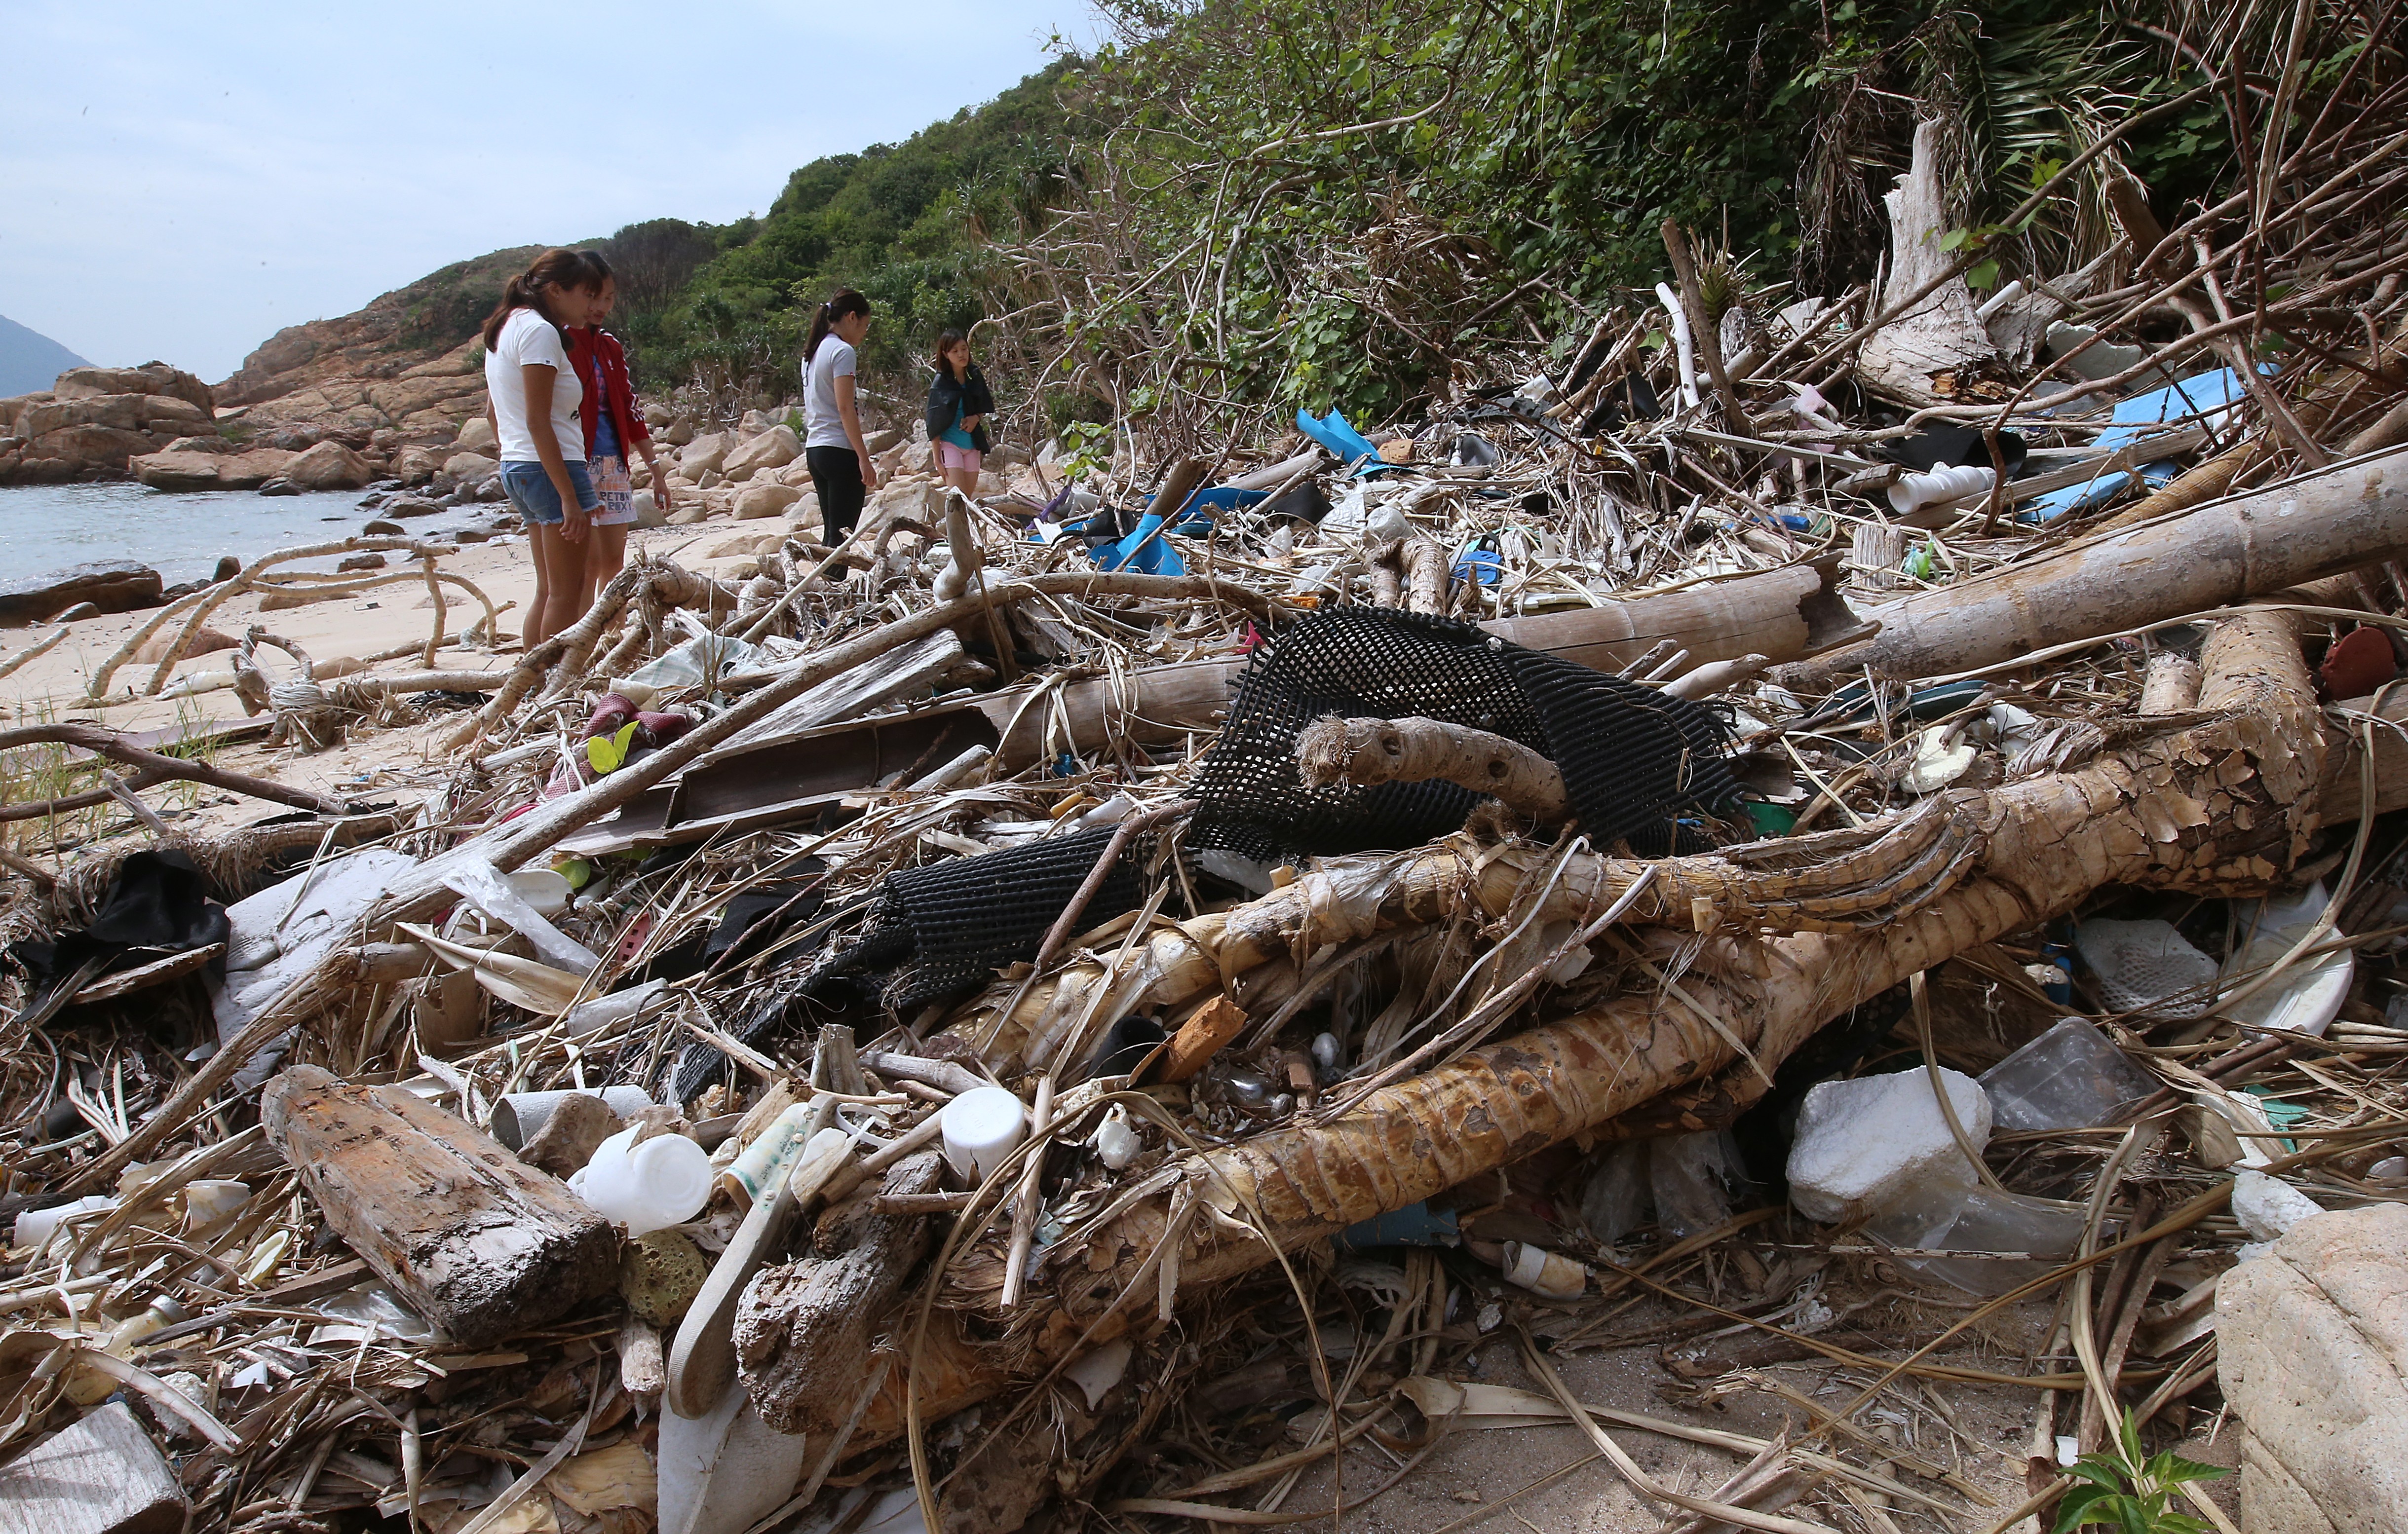 Rubbish lies strewn across a beach at Soko Island in November. Photo: K. Y. Cheng